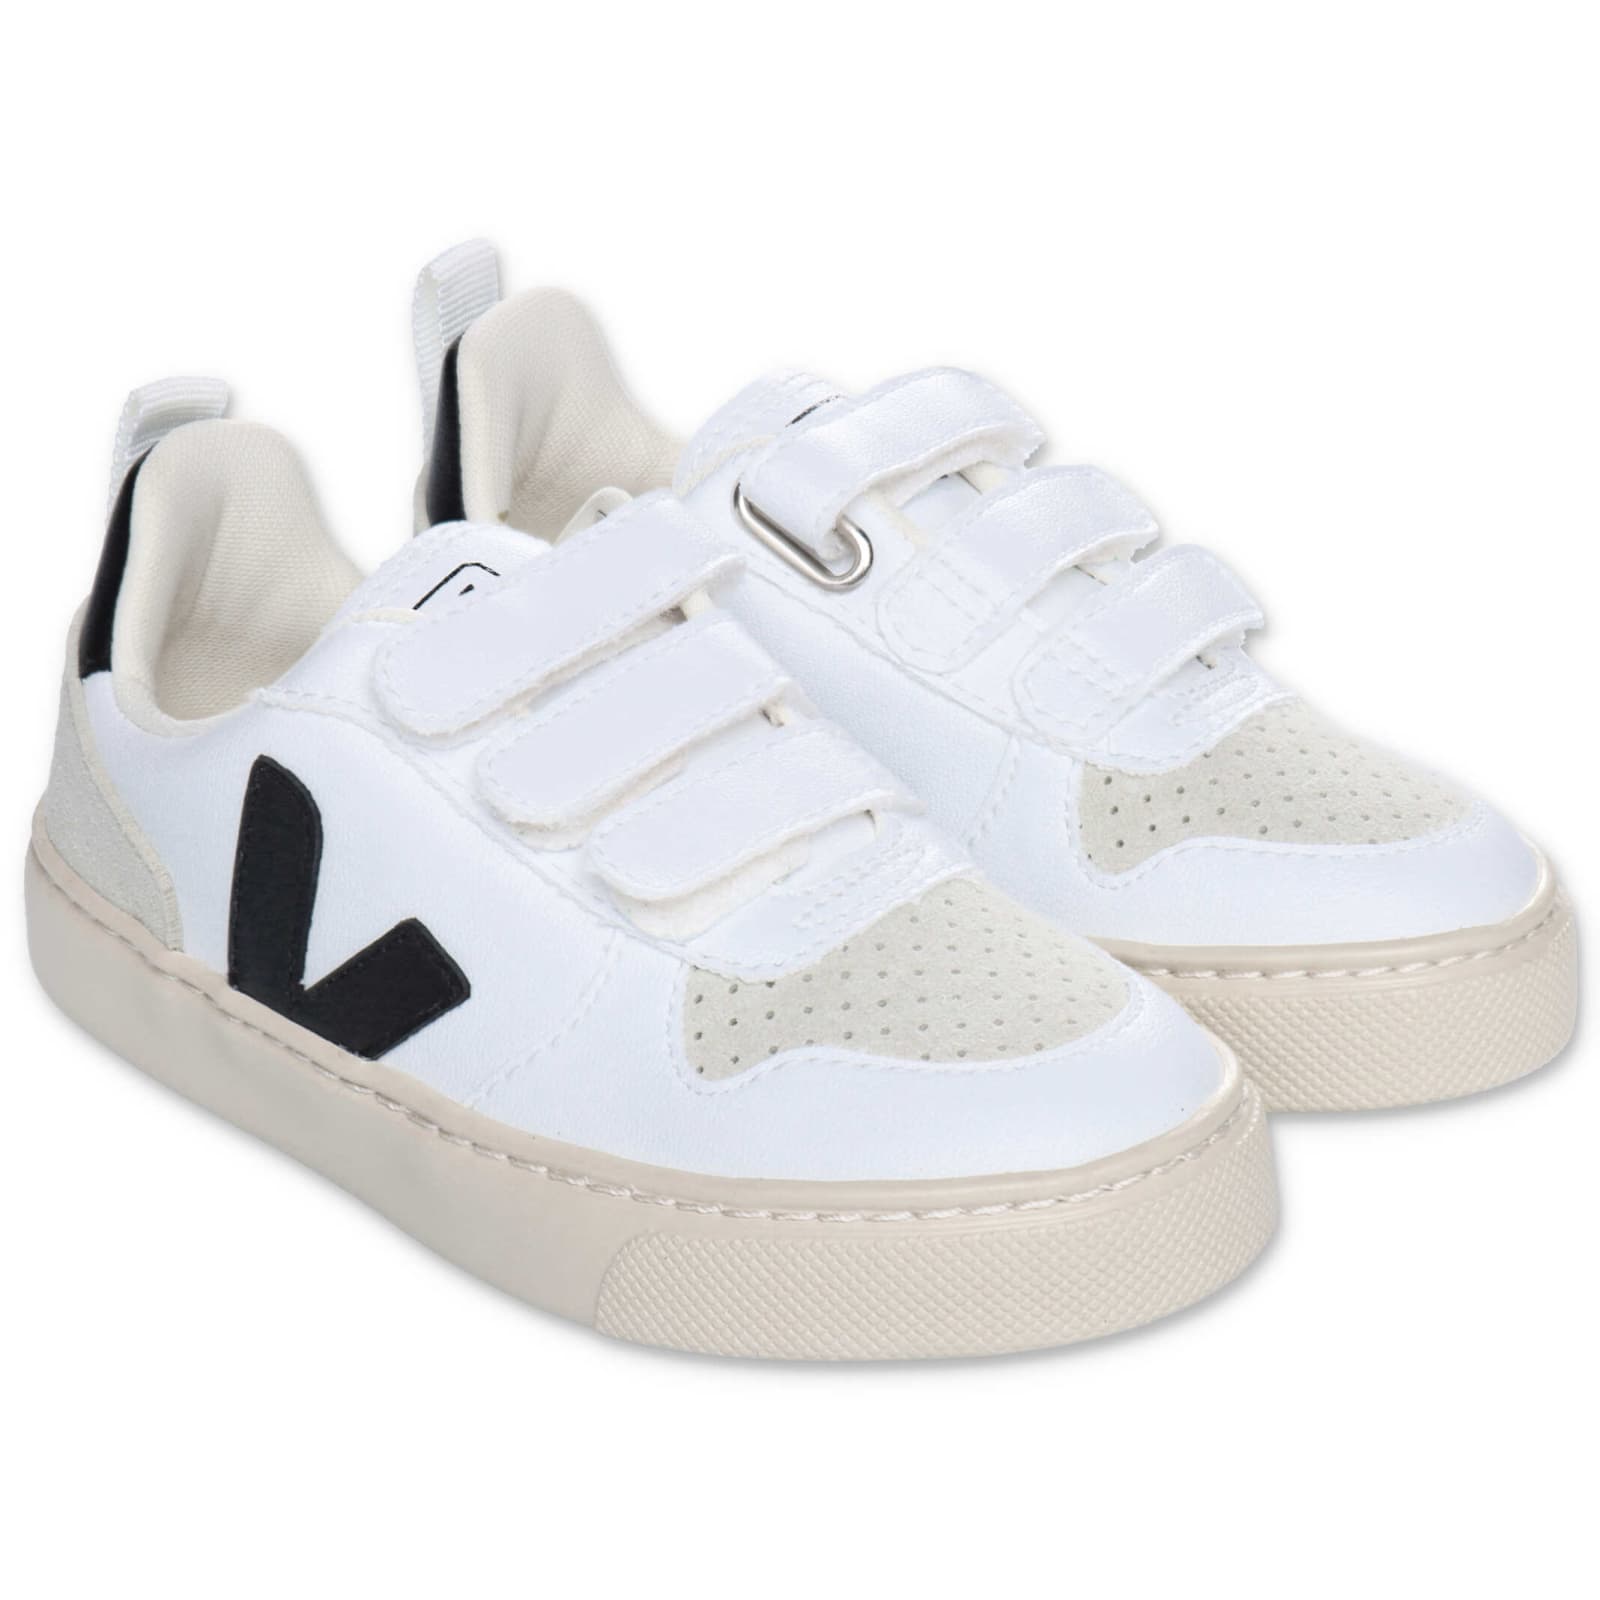 Veja Kids' Sneakers Bianche In Eco-pelle Con Velcro In Bianco E Nero ...